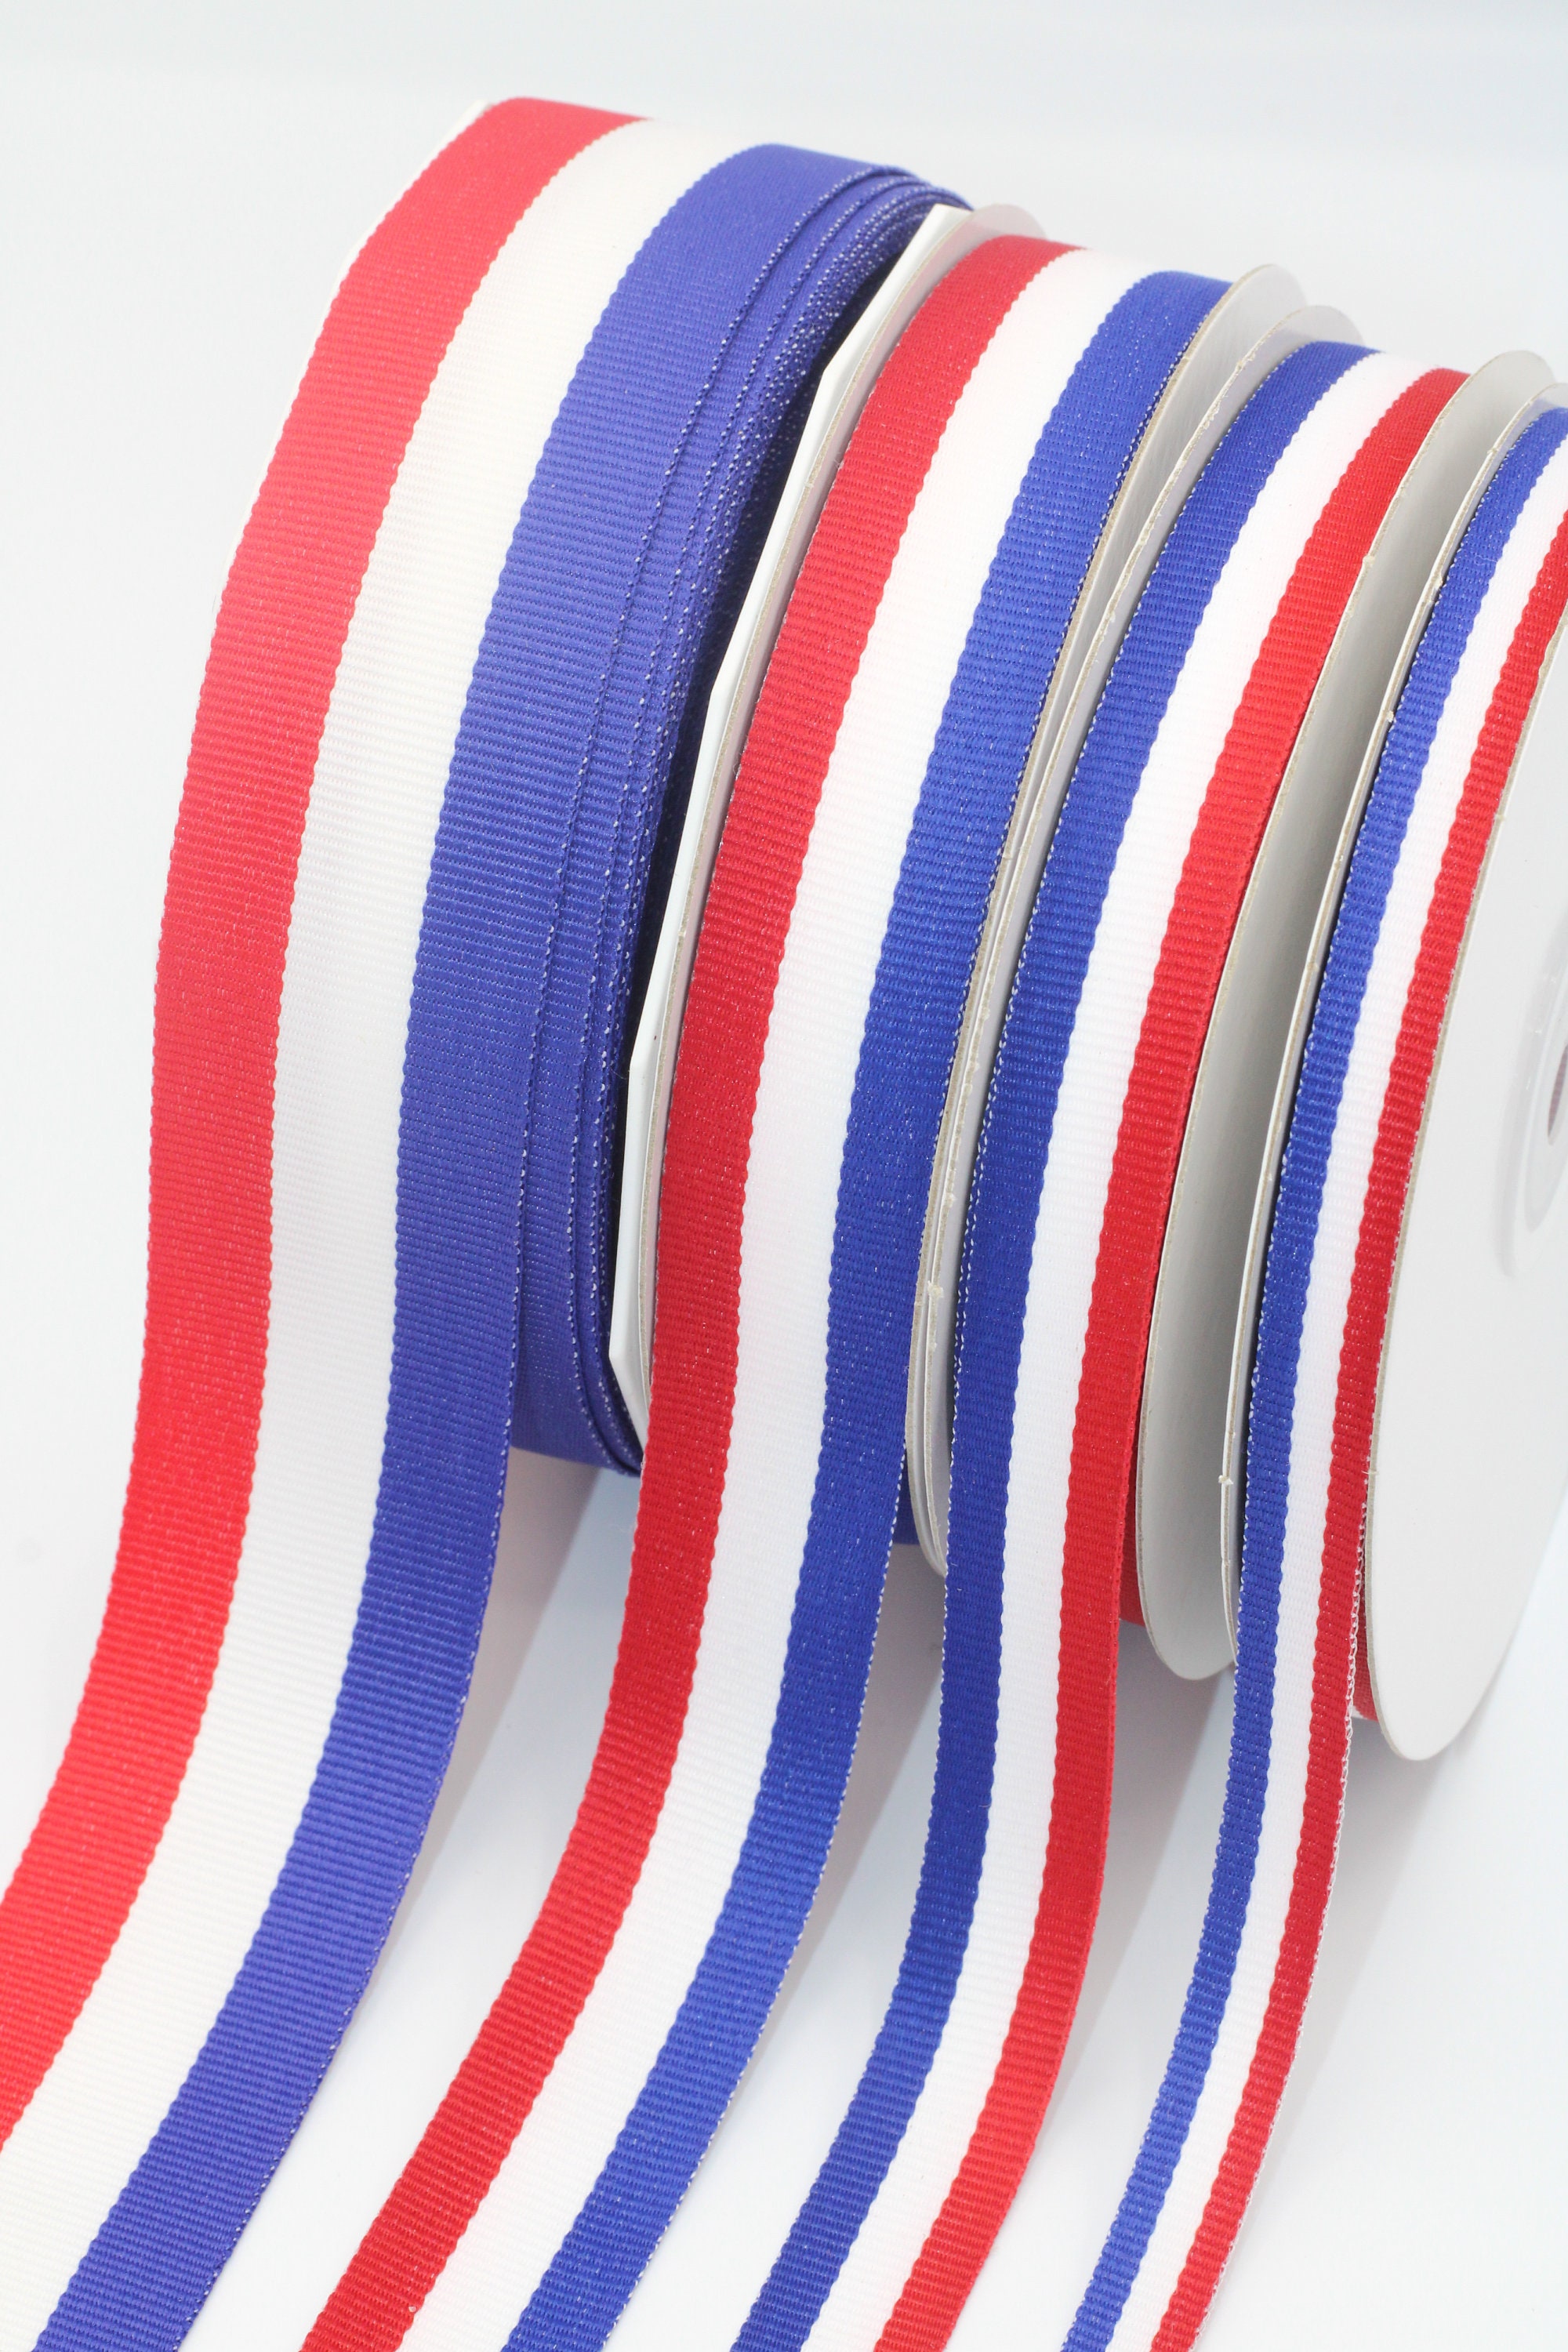 Patriotic Decor - Red White Blue Grosgrain Ribbon 1 ½ Inch - Special Price:  $7.29/Spool